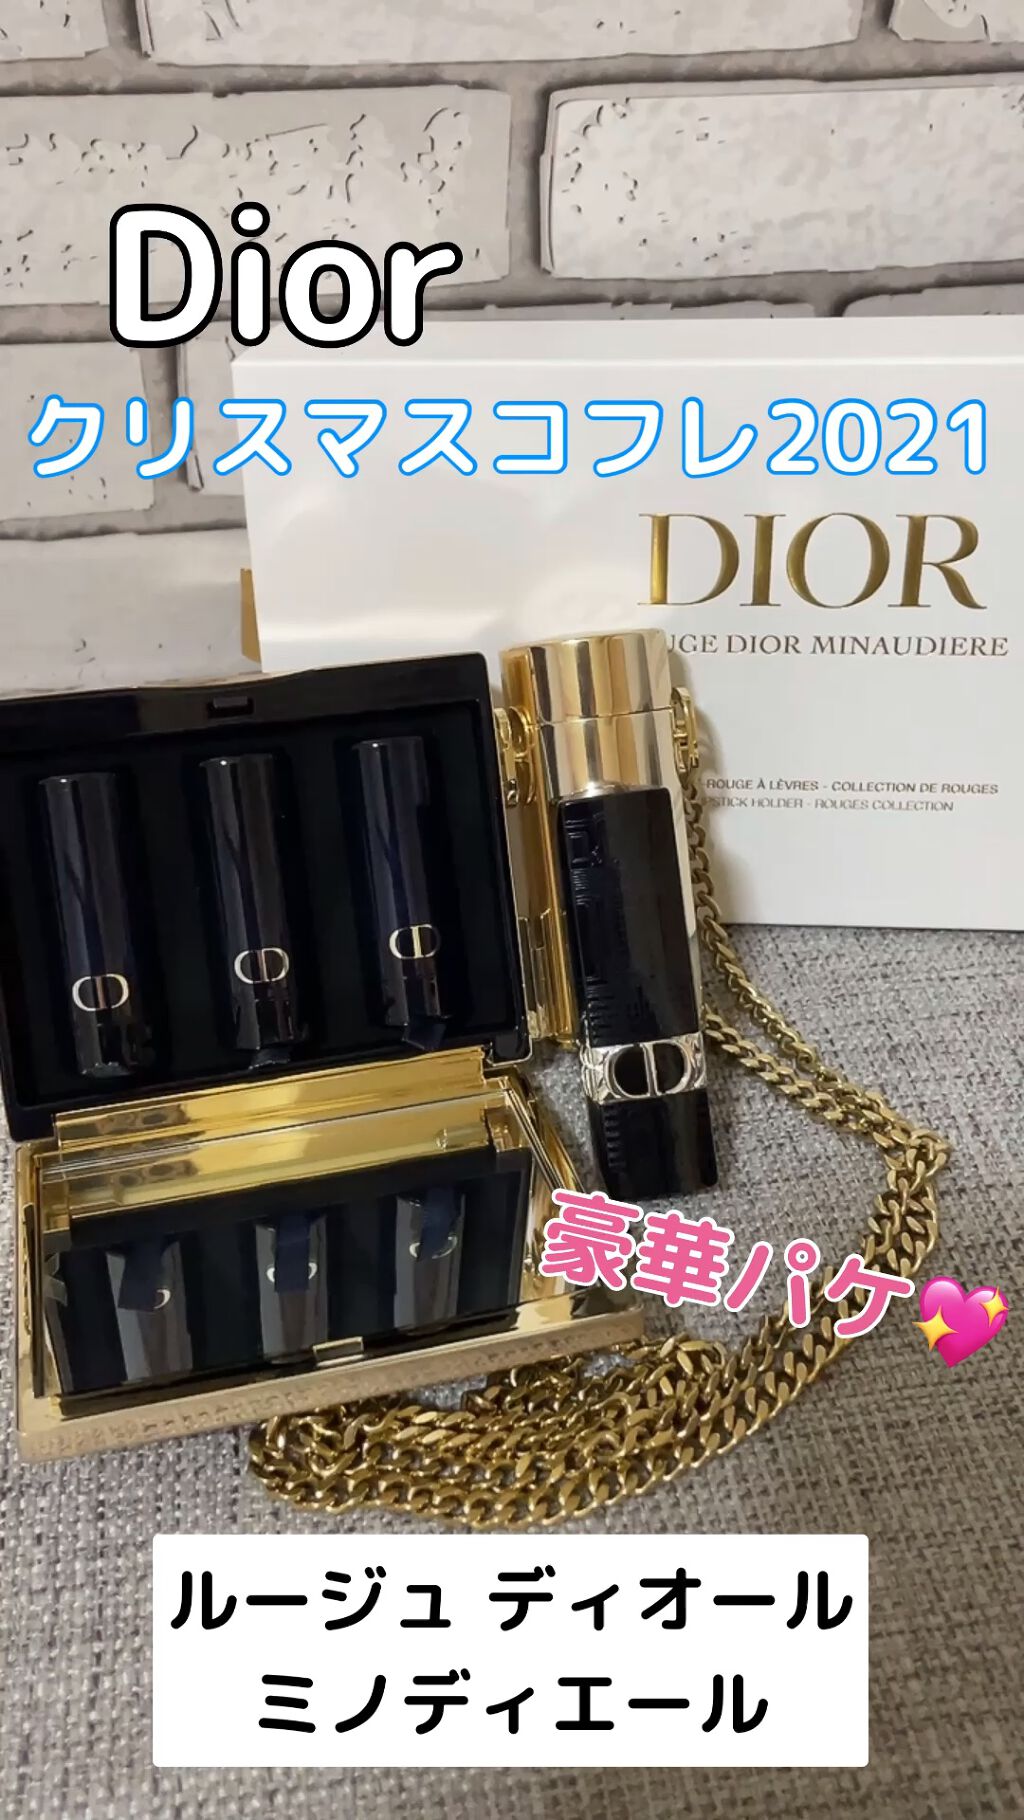 Dior 2021【超美品】クリスマスコフレ ルージュディオール ミノディエール